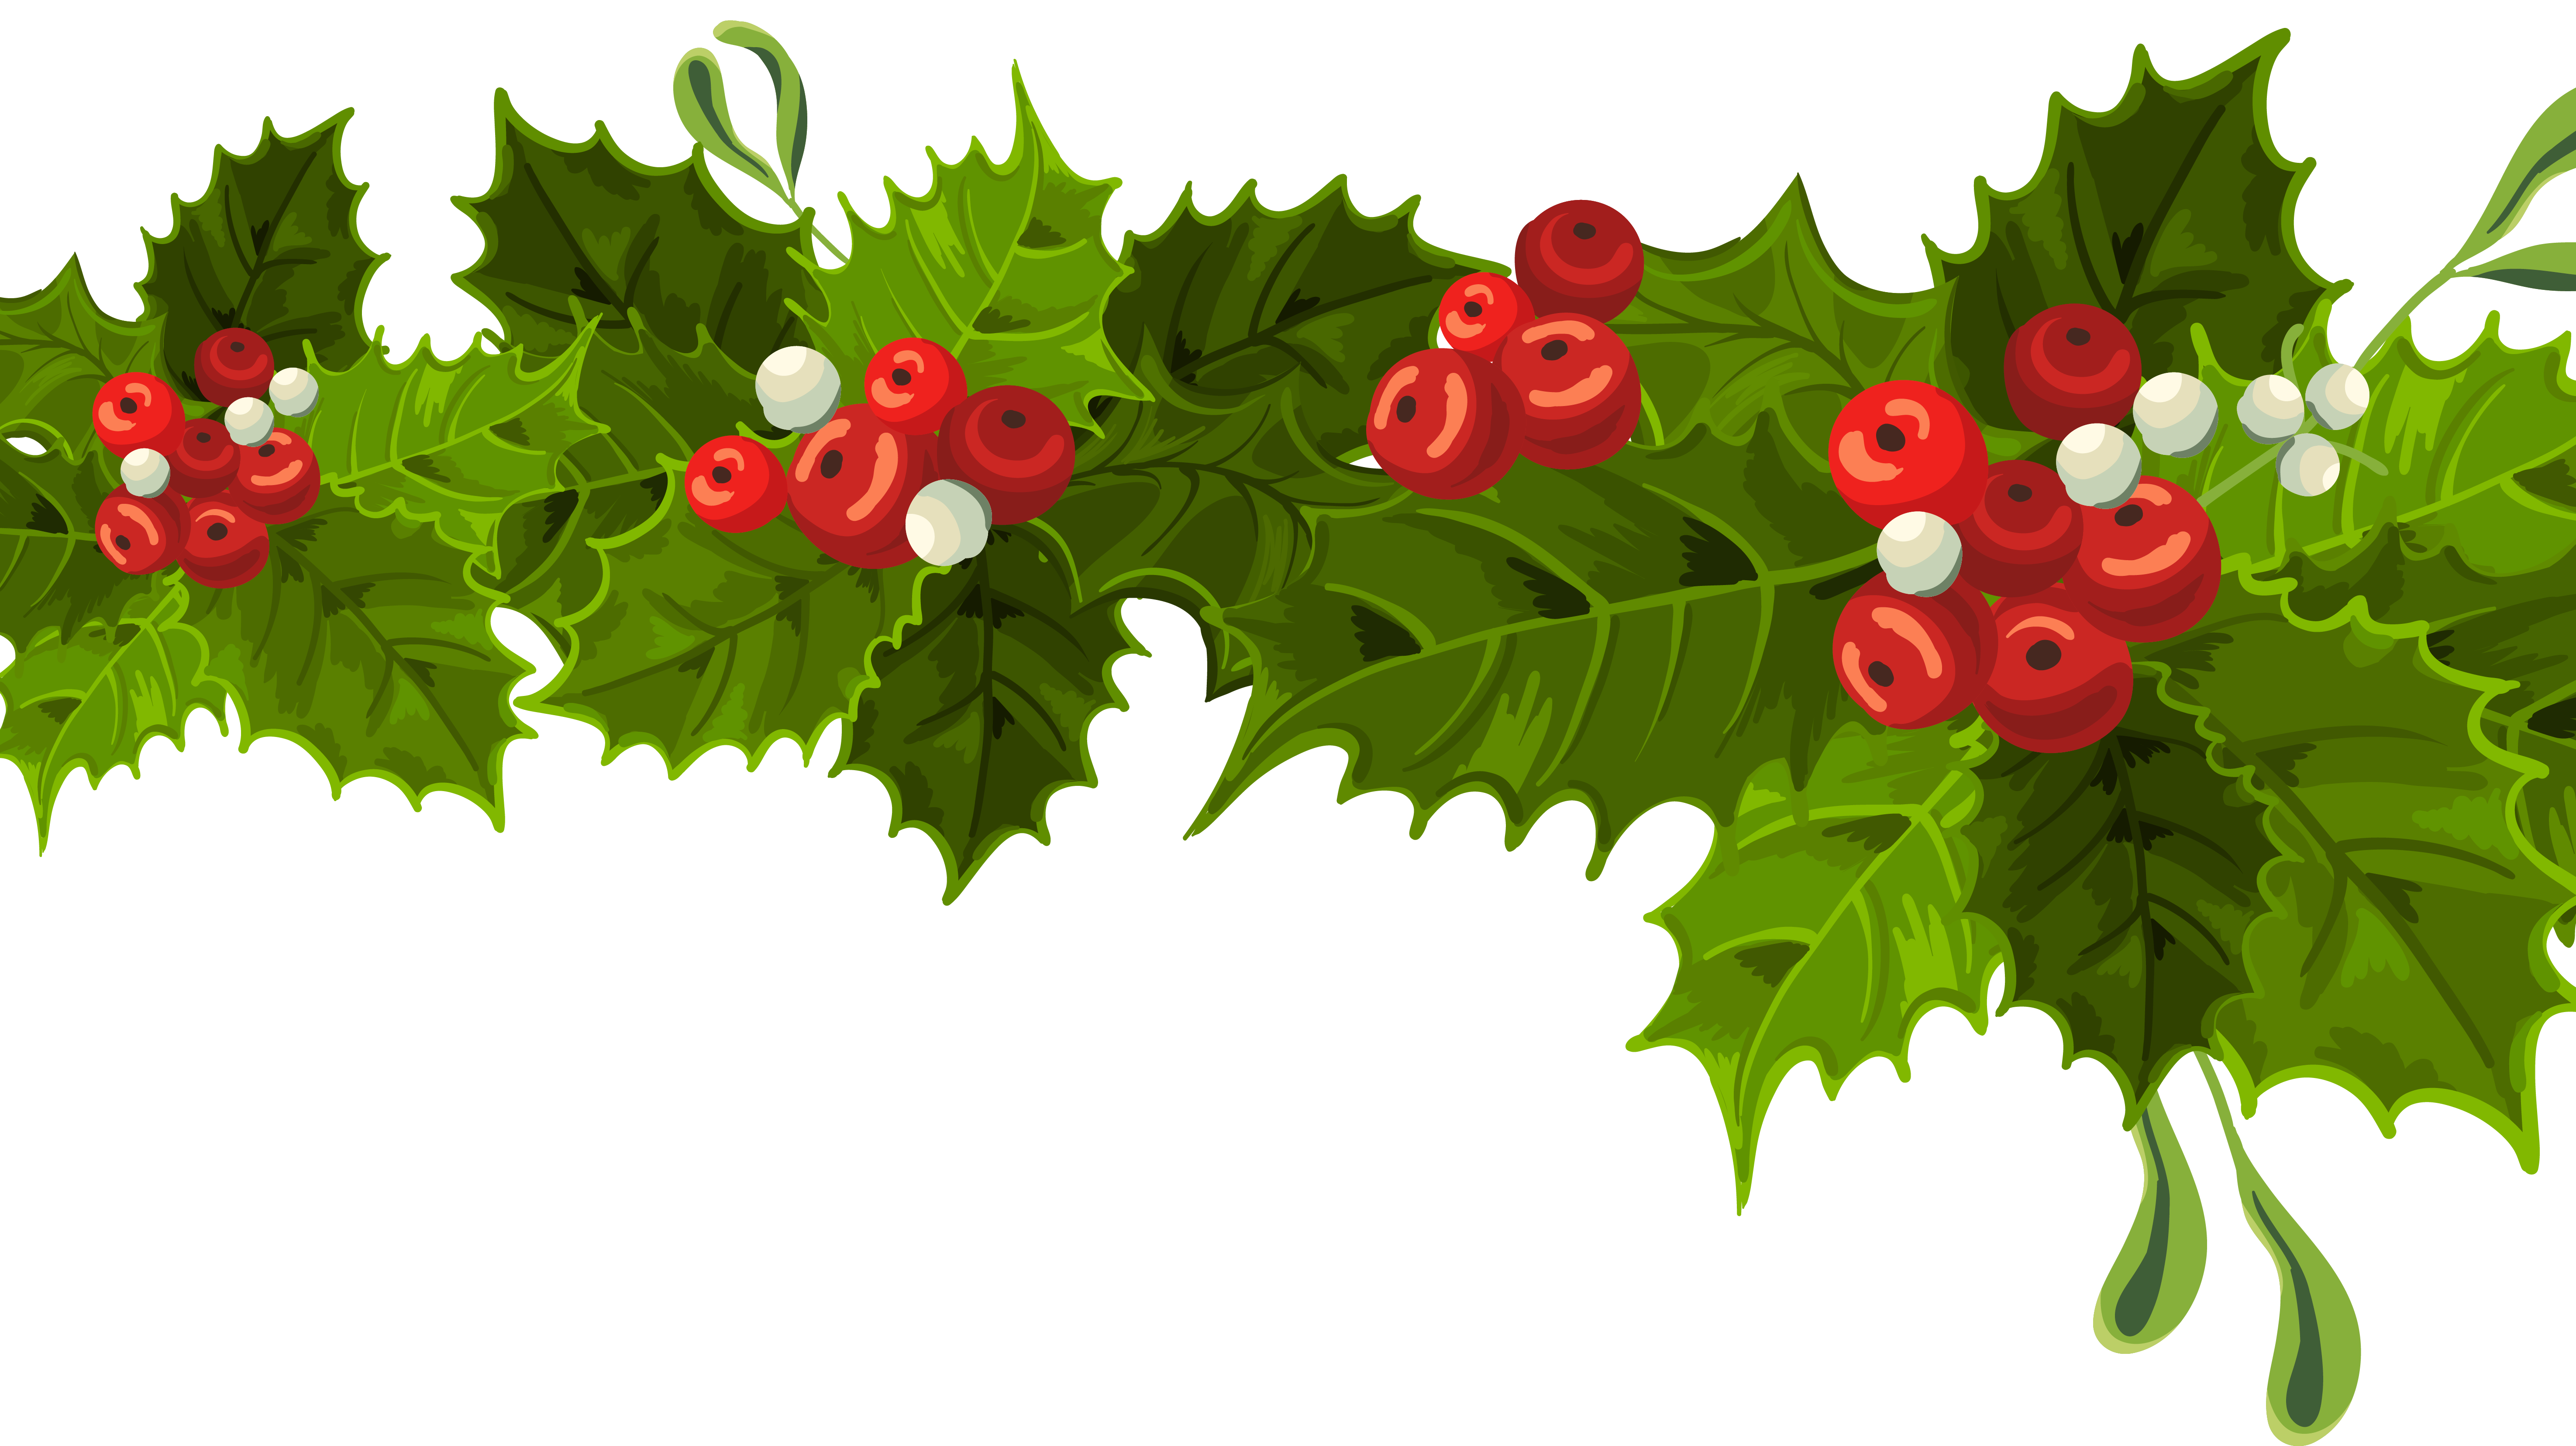 Free Mistletoe Cliparts Transparent, Download Free Mistletoe Cliparts